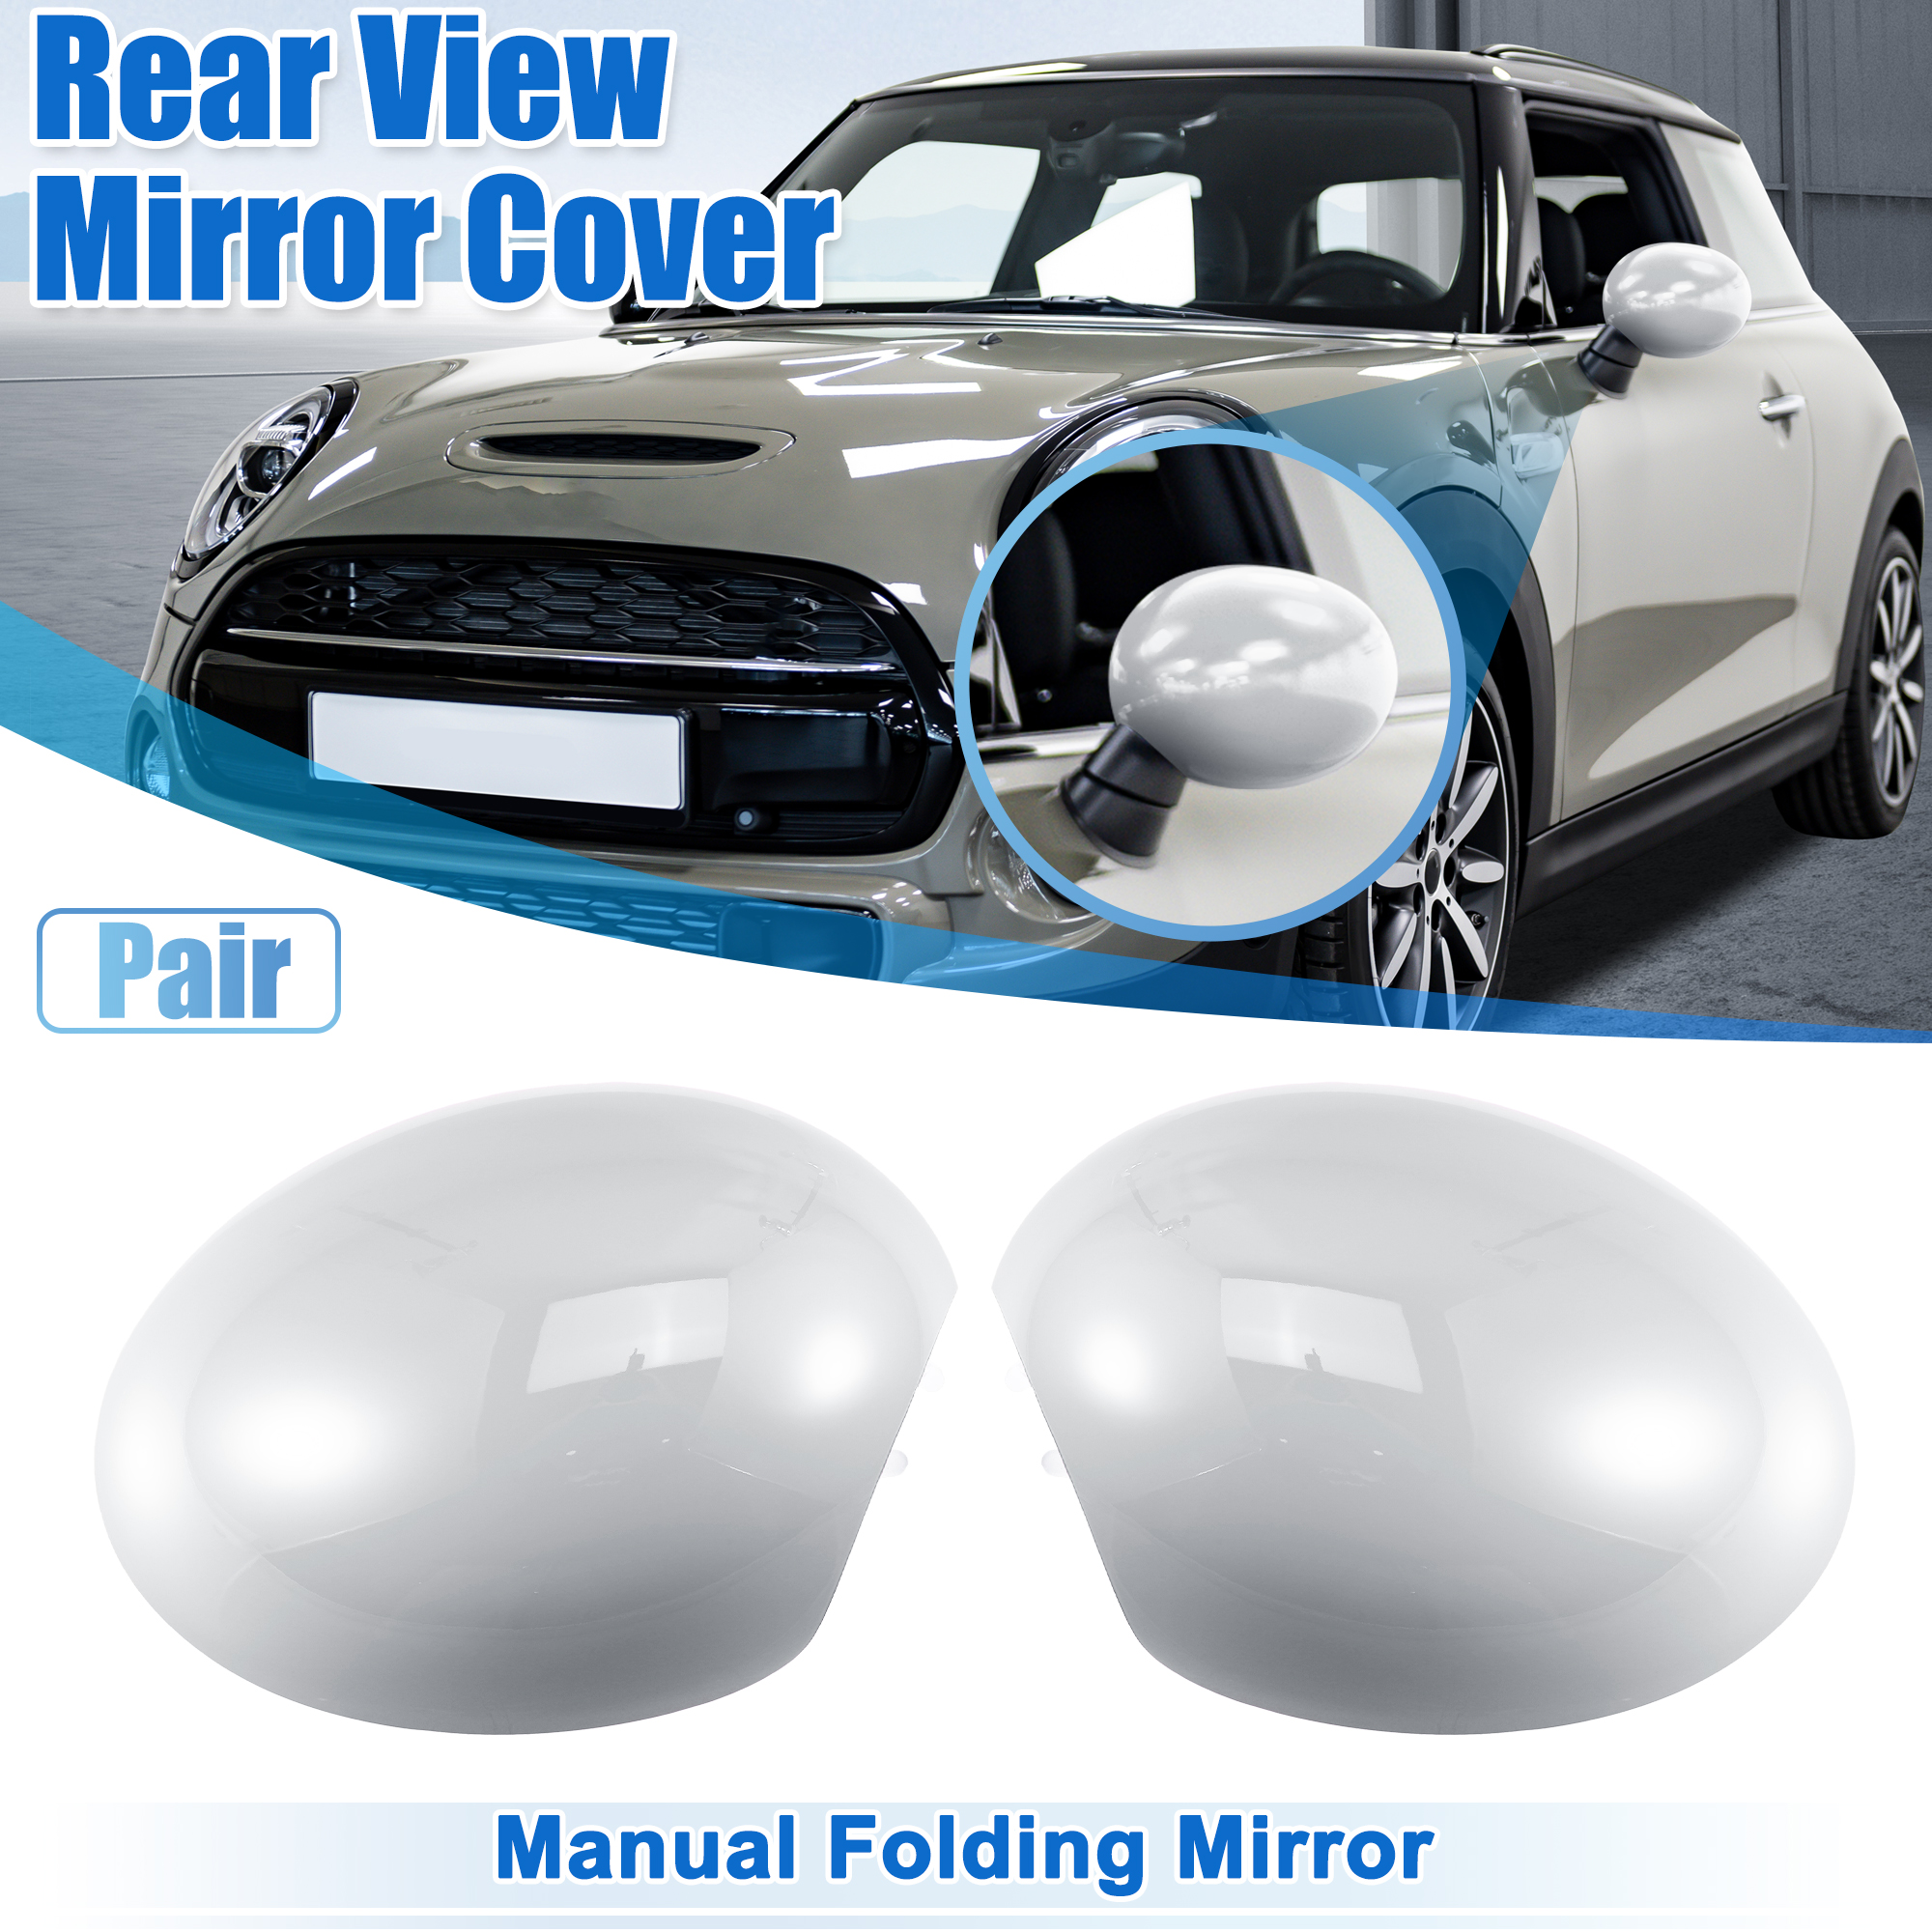 Unique Bargains 1 Pair Manual Folding Mirror Rearview Mirror Cover for Mini Cooper R55 White